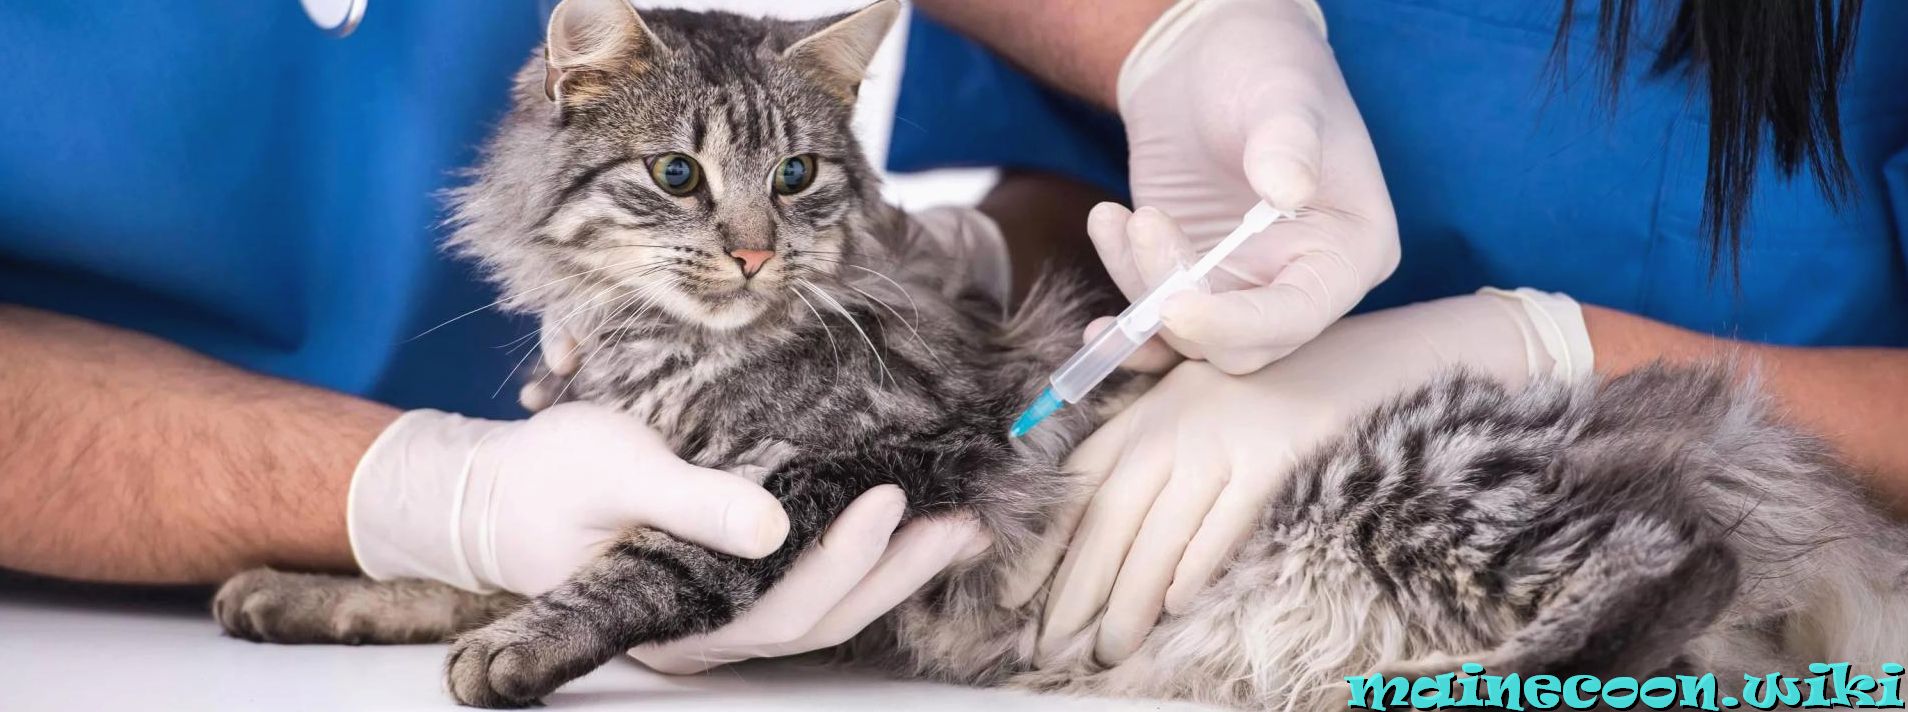 ветеринар делает прививку котятам Мейн-куна